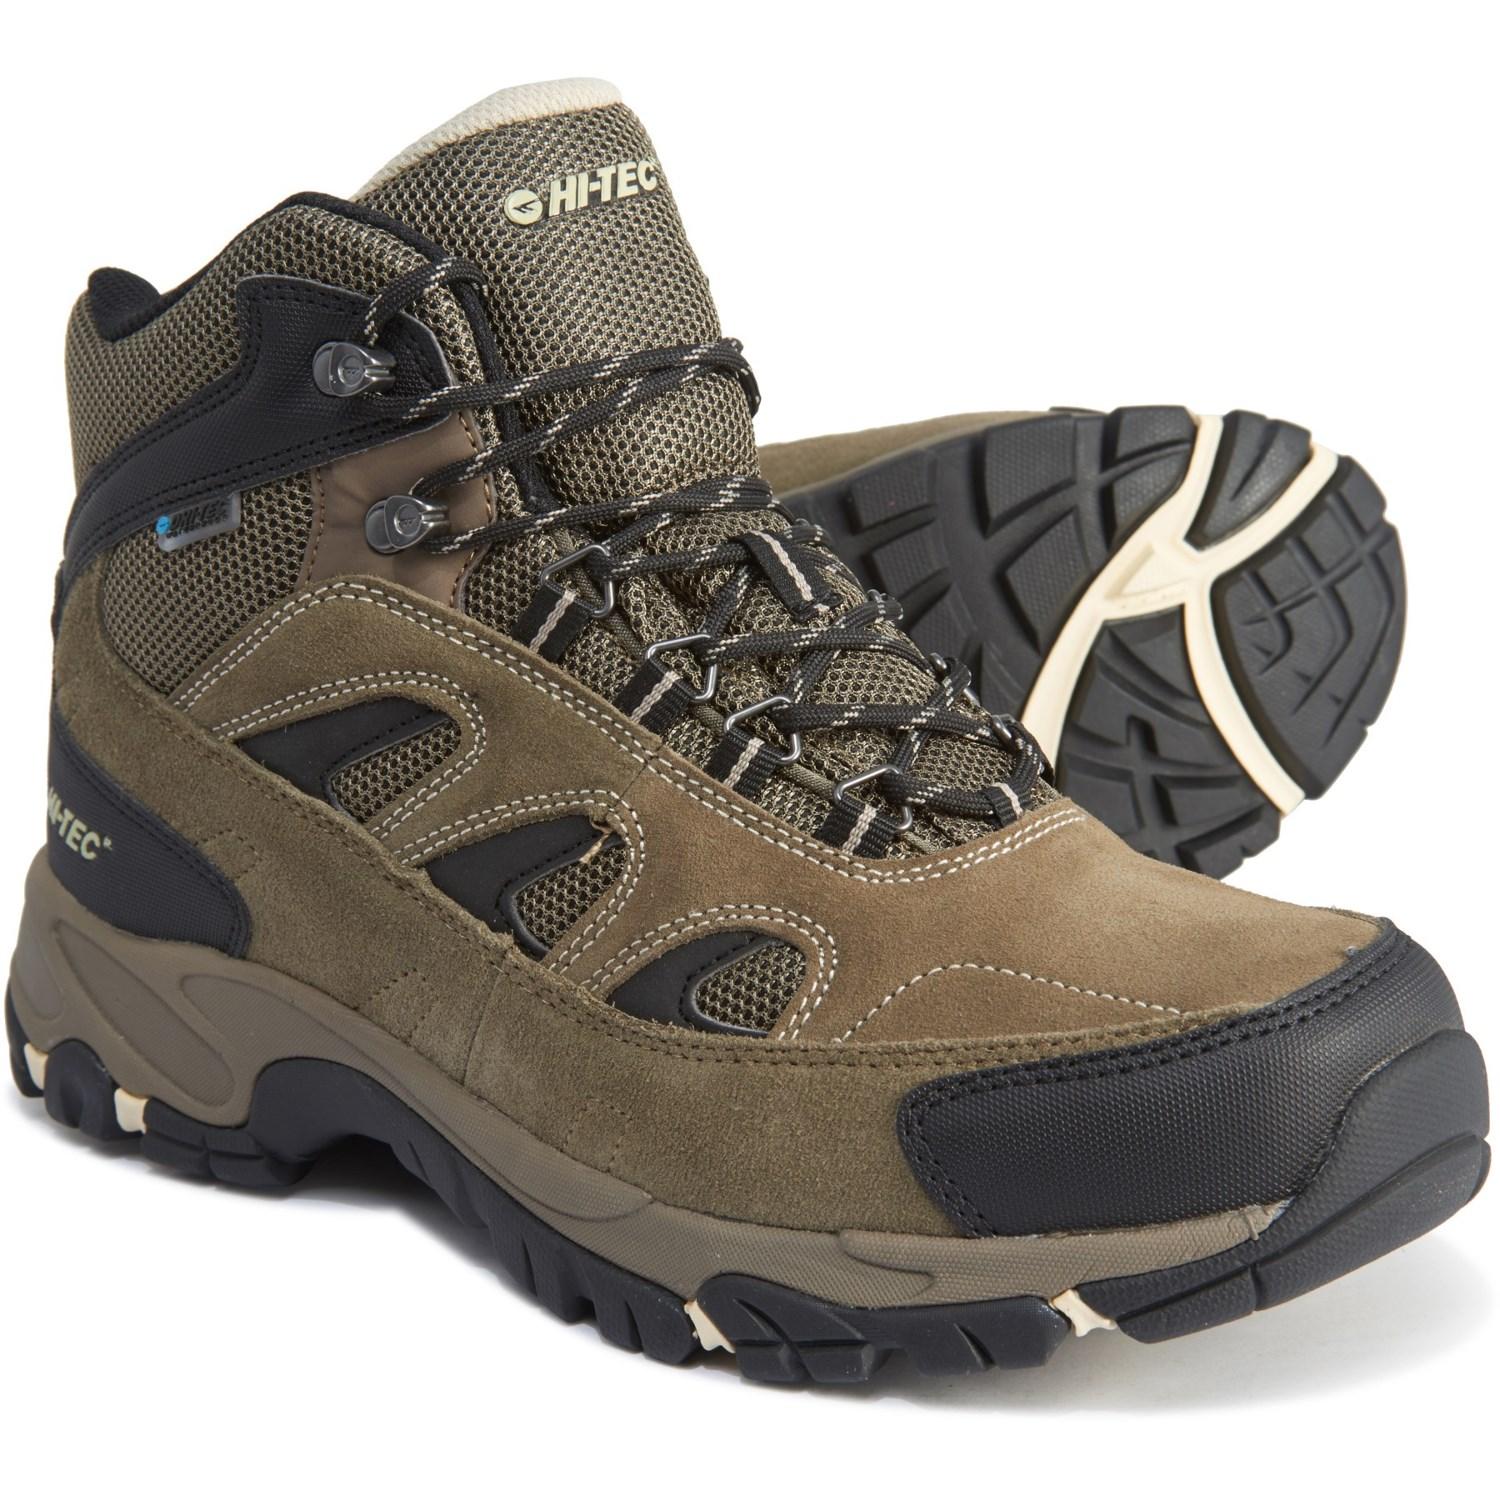 Hi-Tec Men's Ramsey Waterproof Mid-Top Leather Hiking Boot